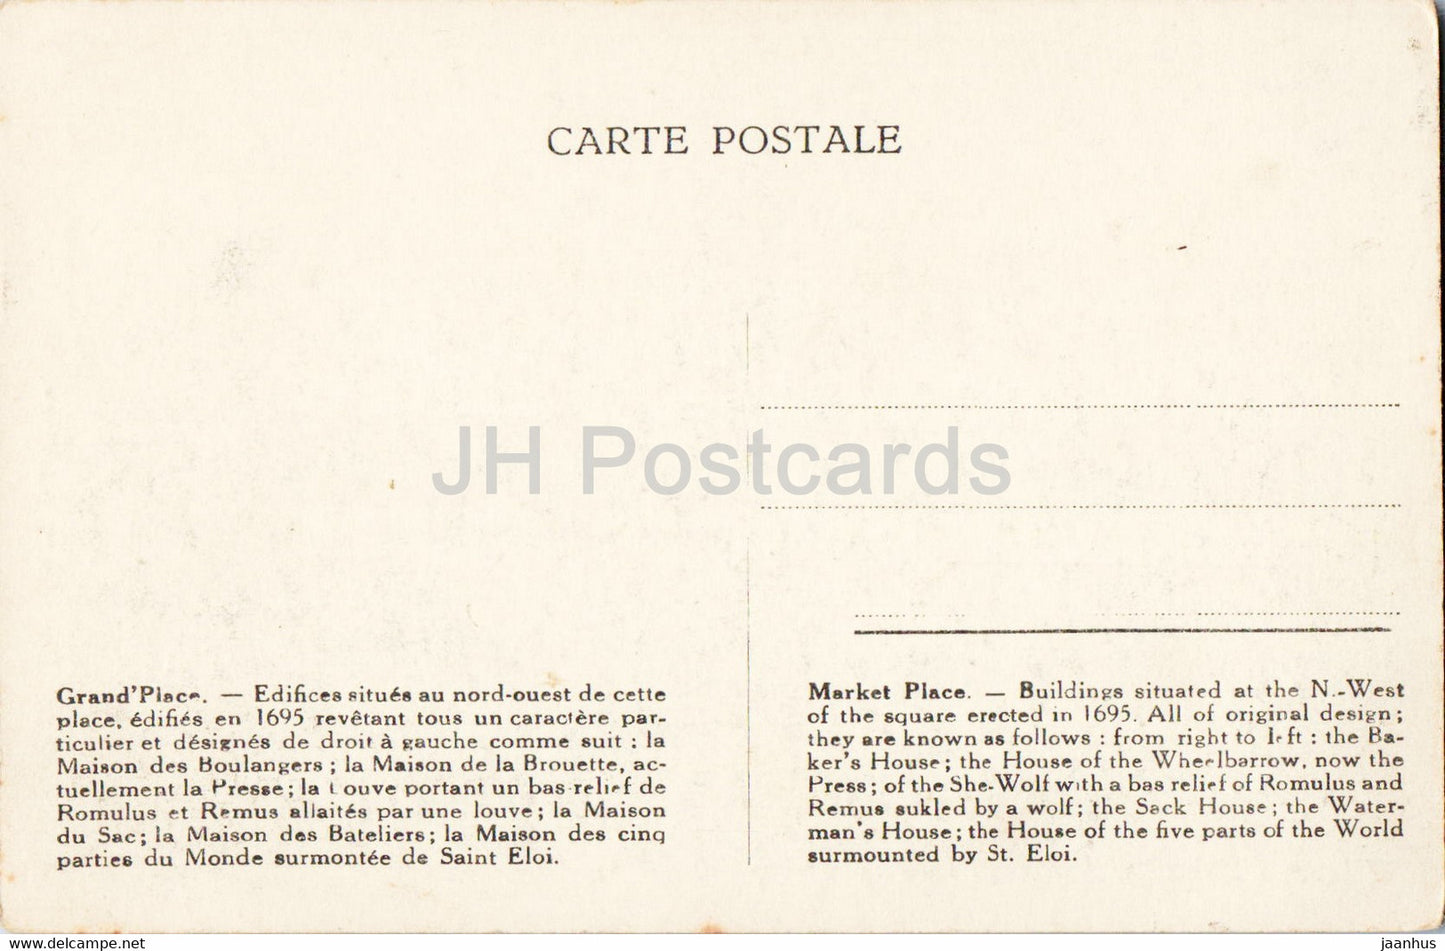 Brüssel - Brüssel - Vue Generale de la Grand Place - alte Postkarte - Belgien - unbenutzt